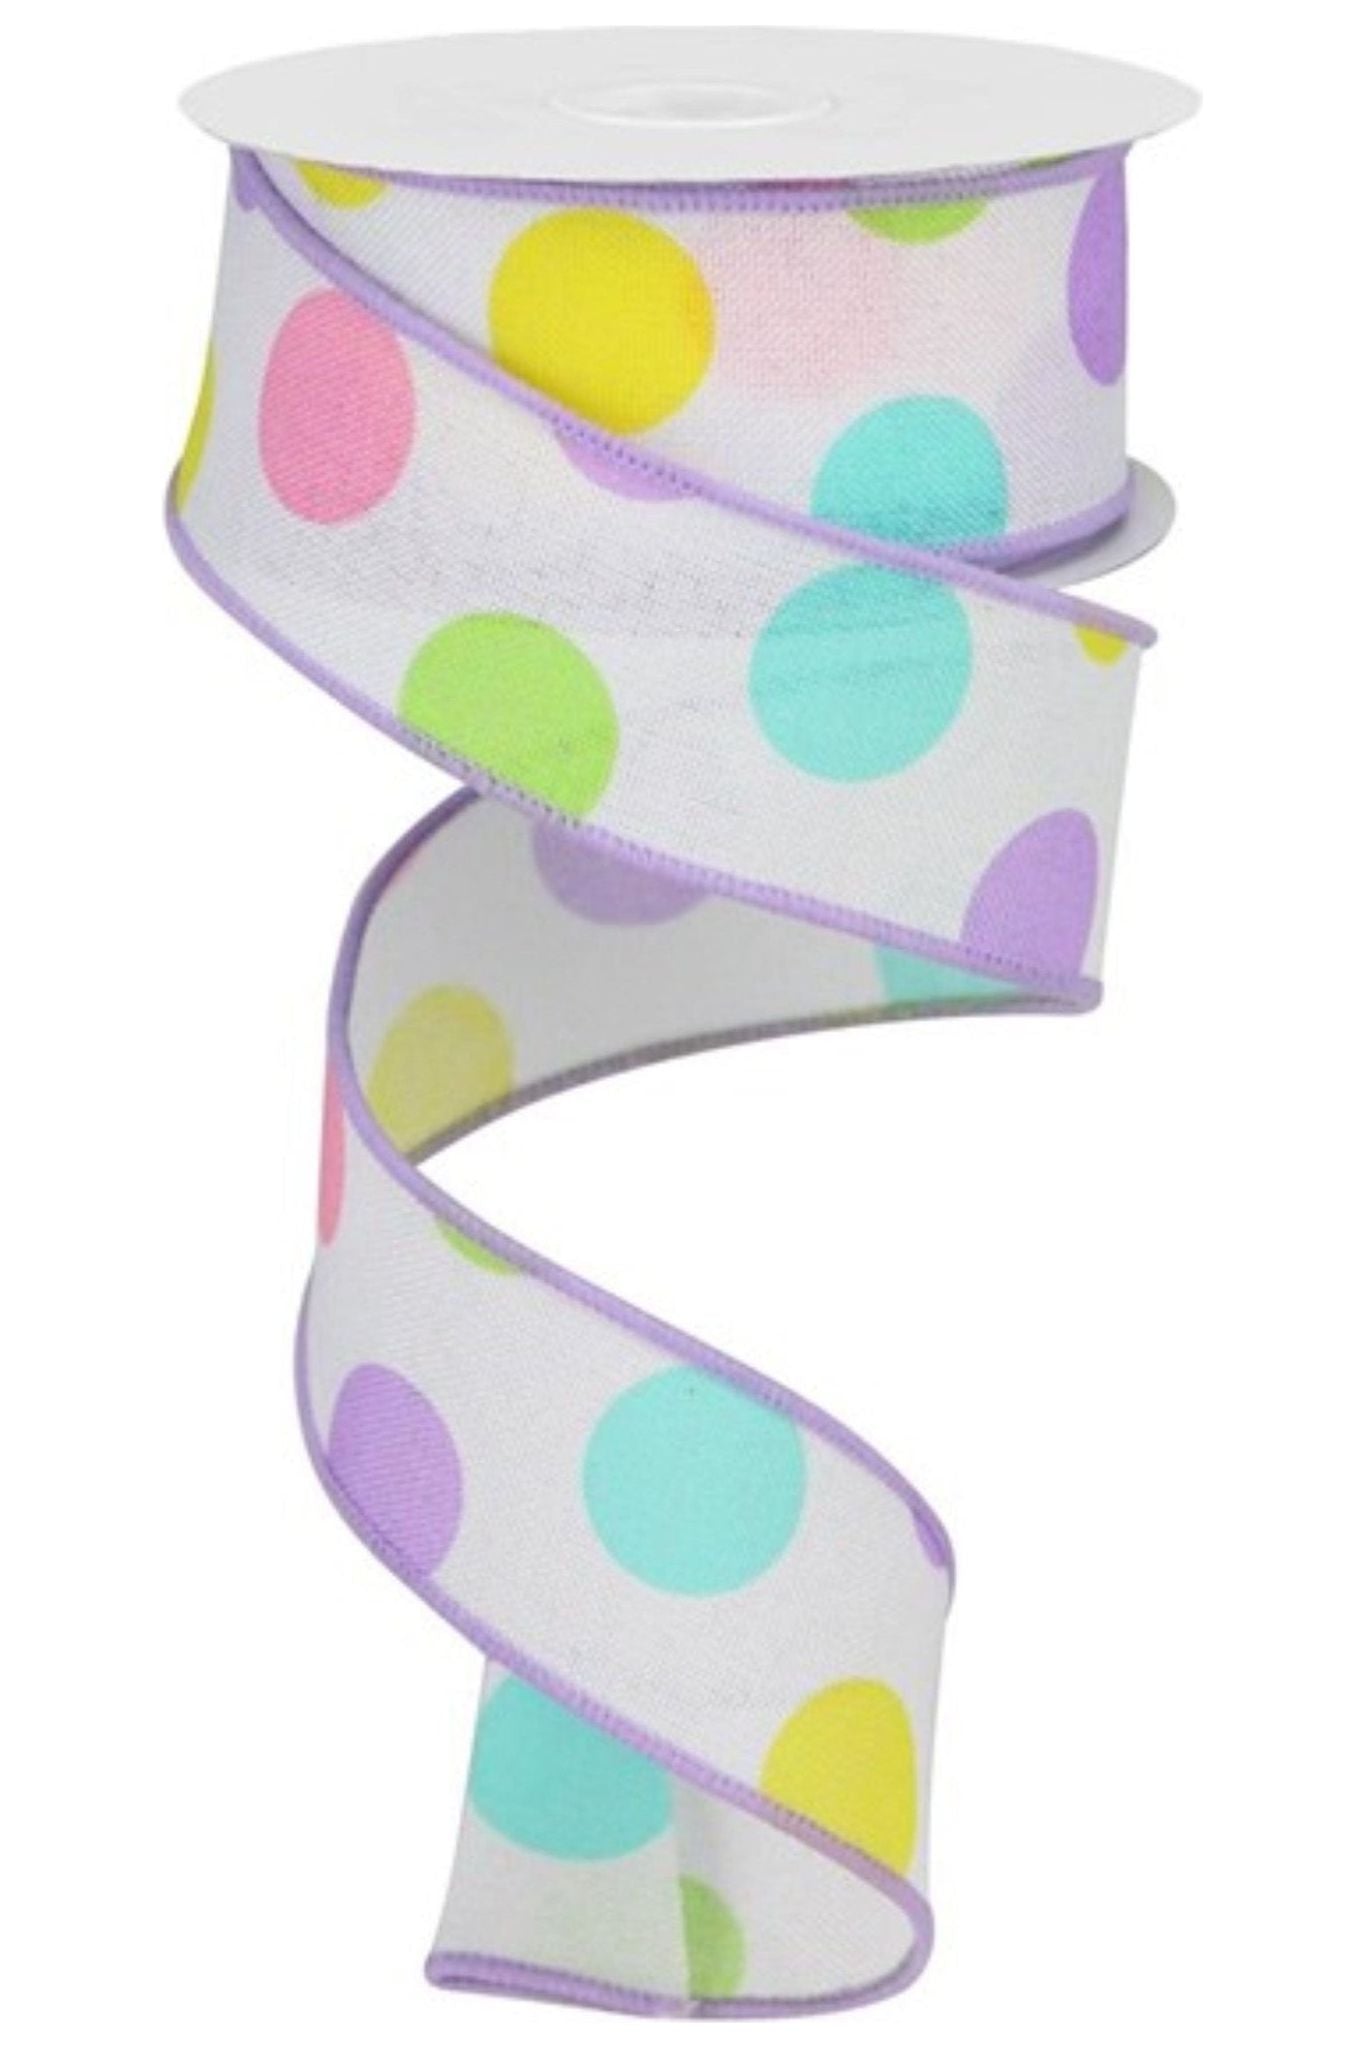 Shop For 1.5" Multi Polka Dots on Royal Ribbon: White/Lavender (10 Yards) RGA166213